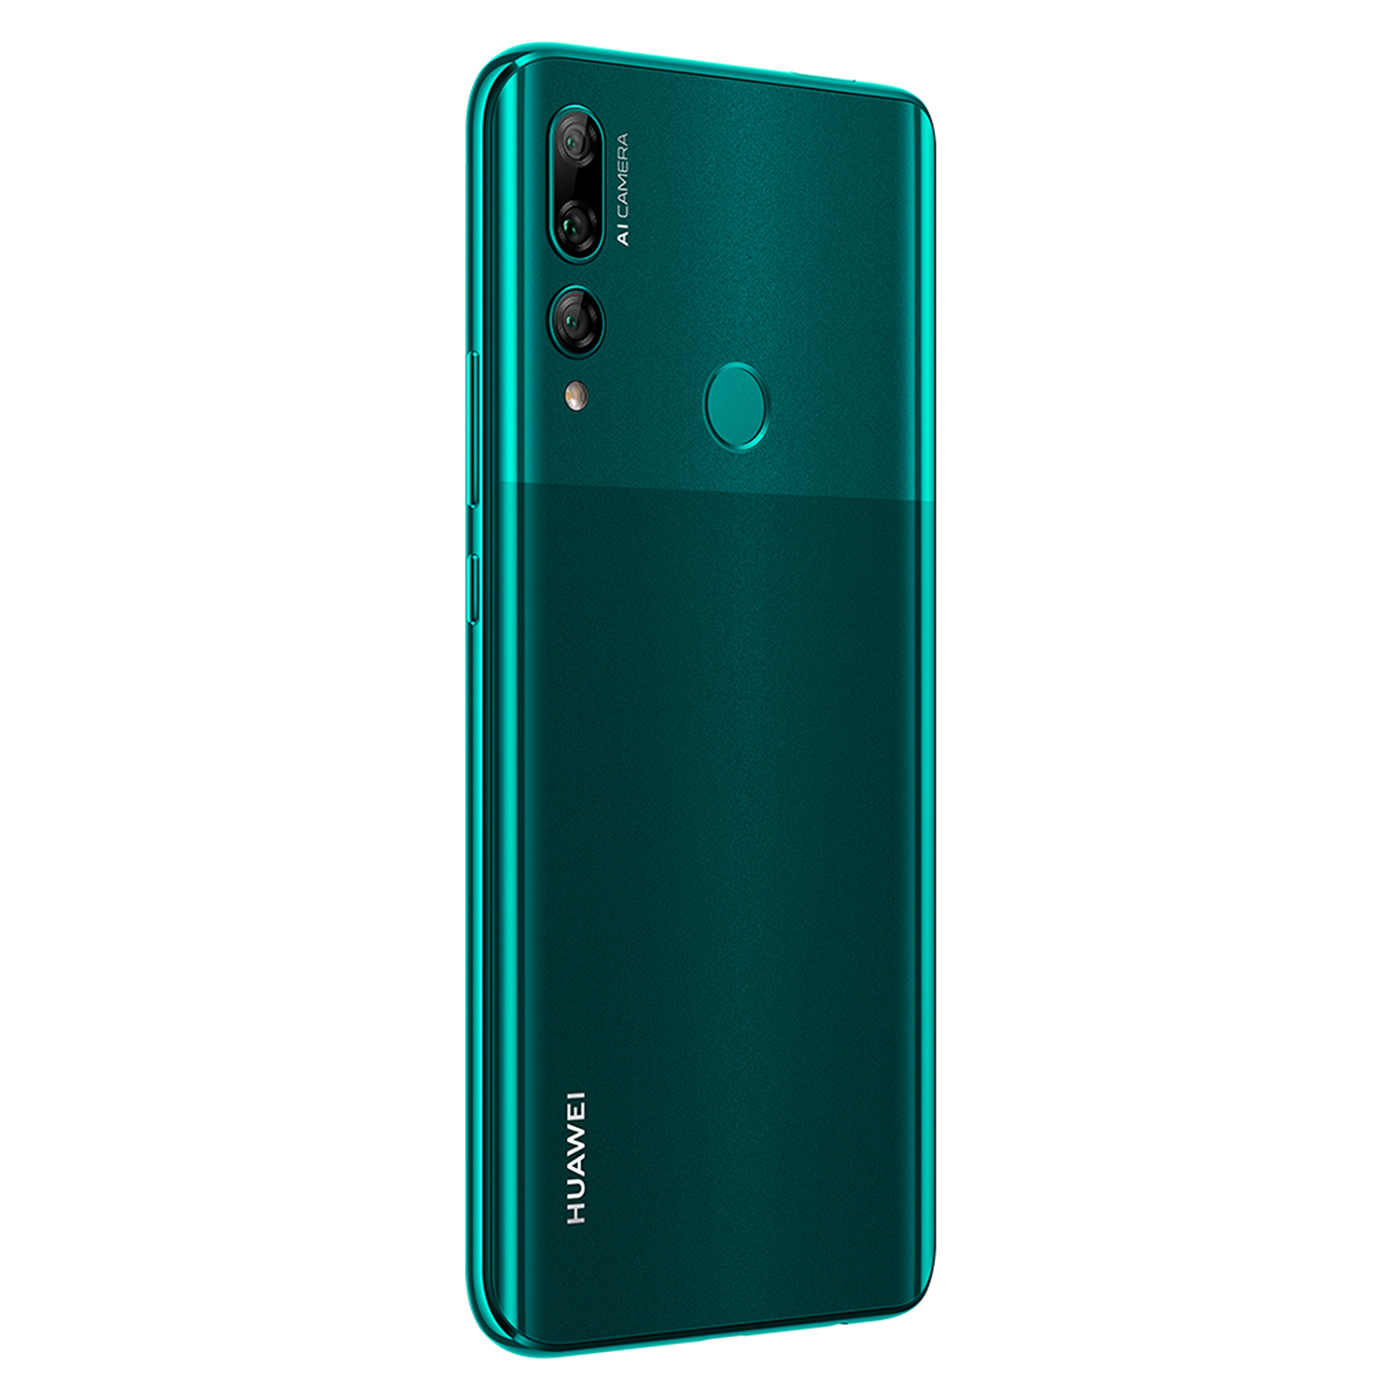 Celular HUAWEI Y9 Prime 128GB Verde - Emerald Green